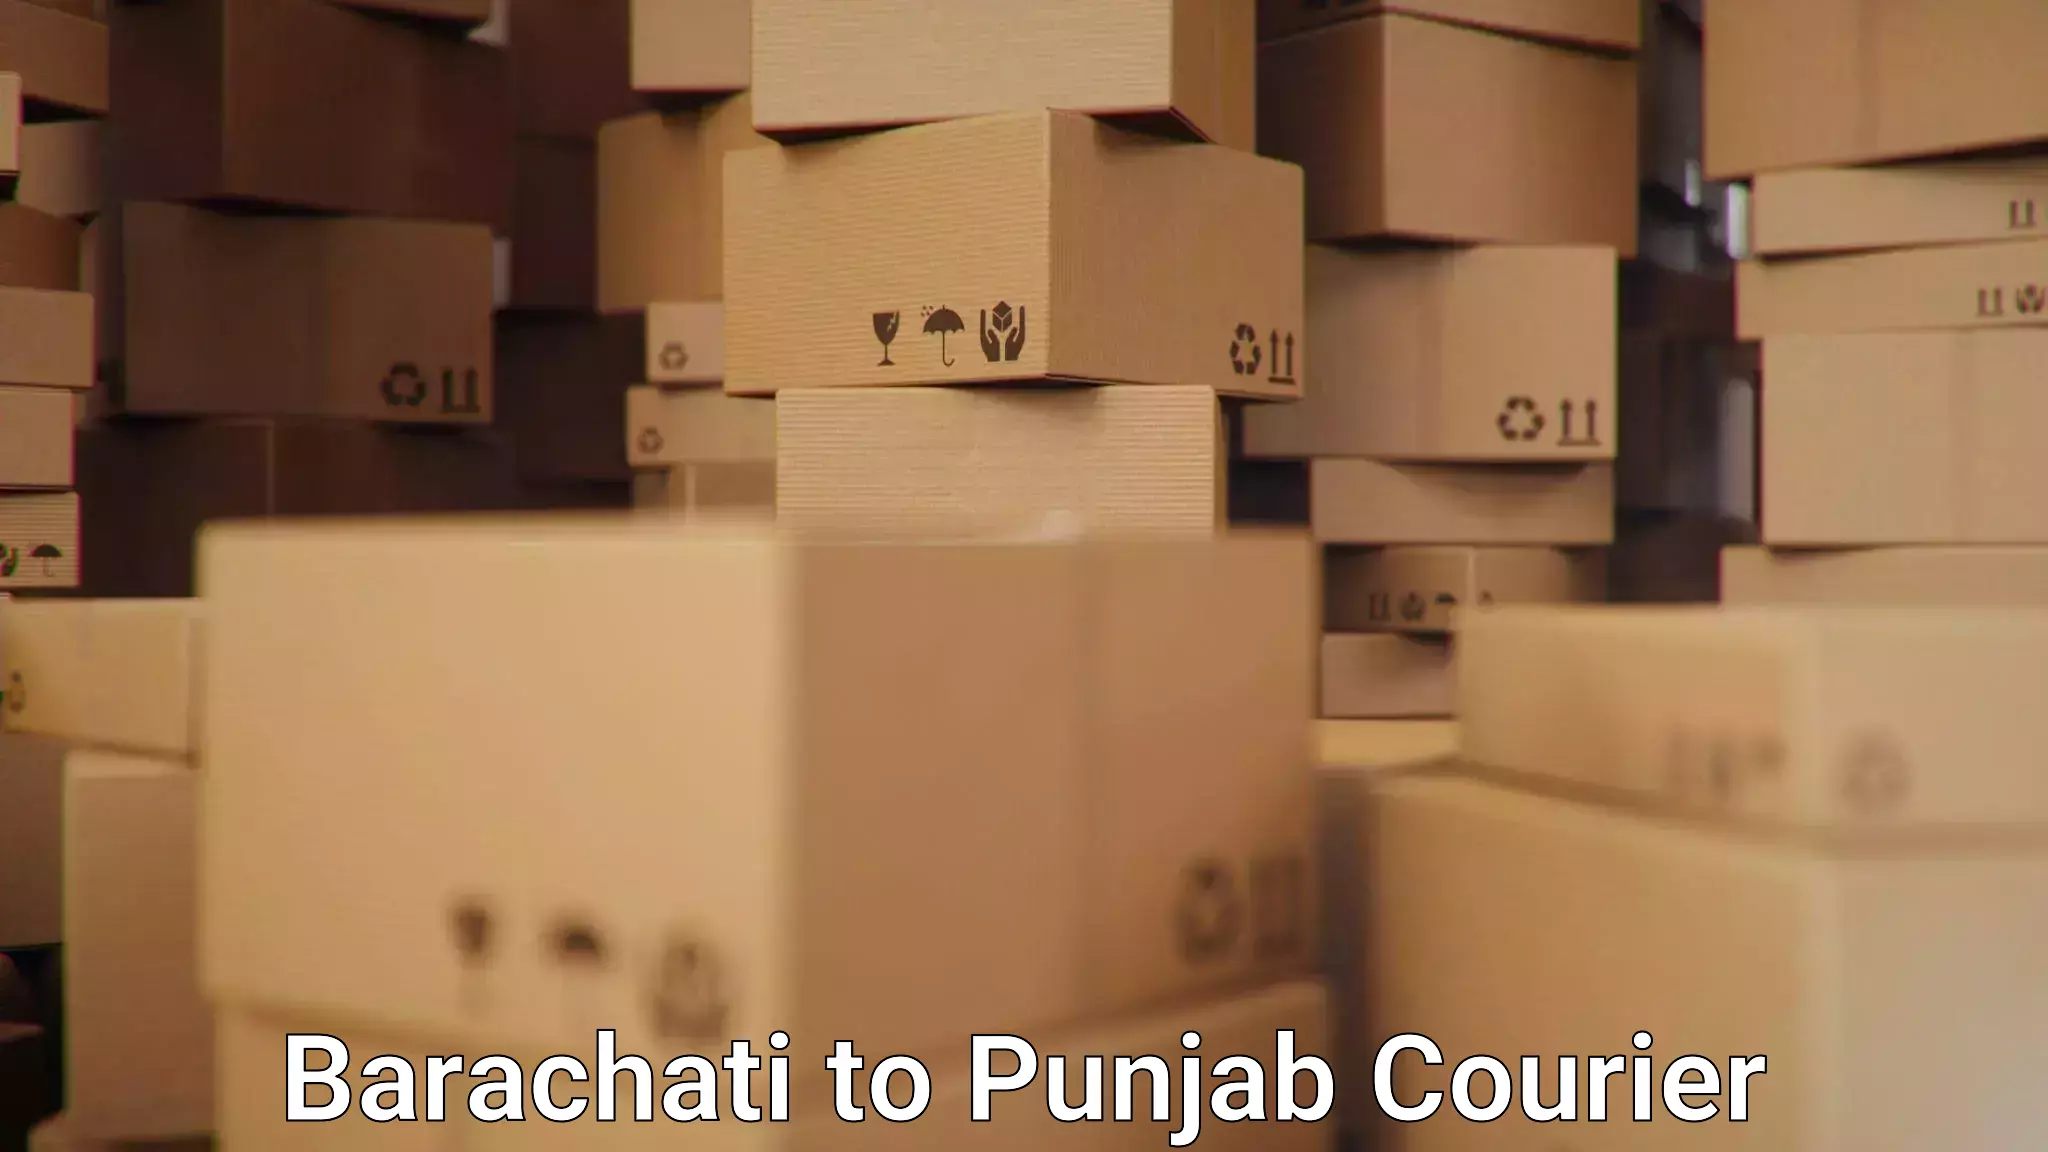 Global delivery options Barachati to Punjab